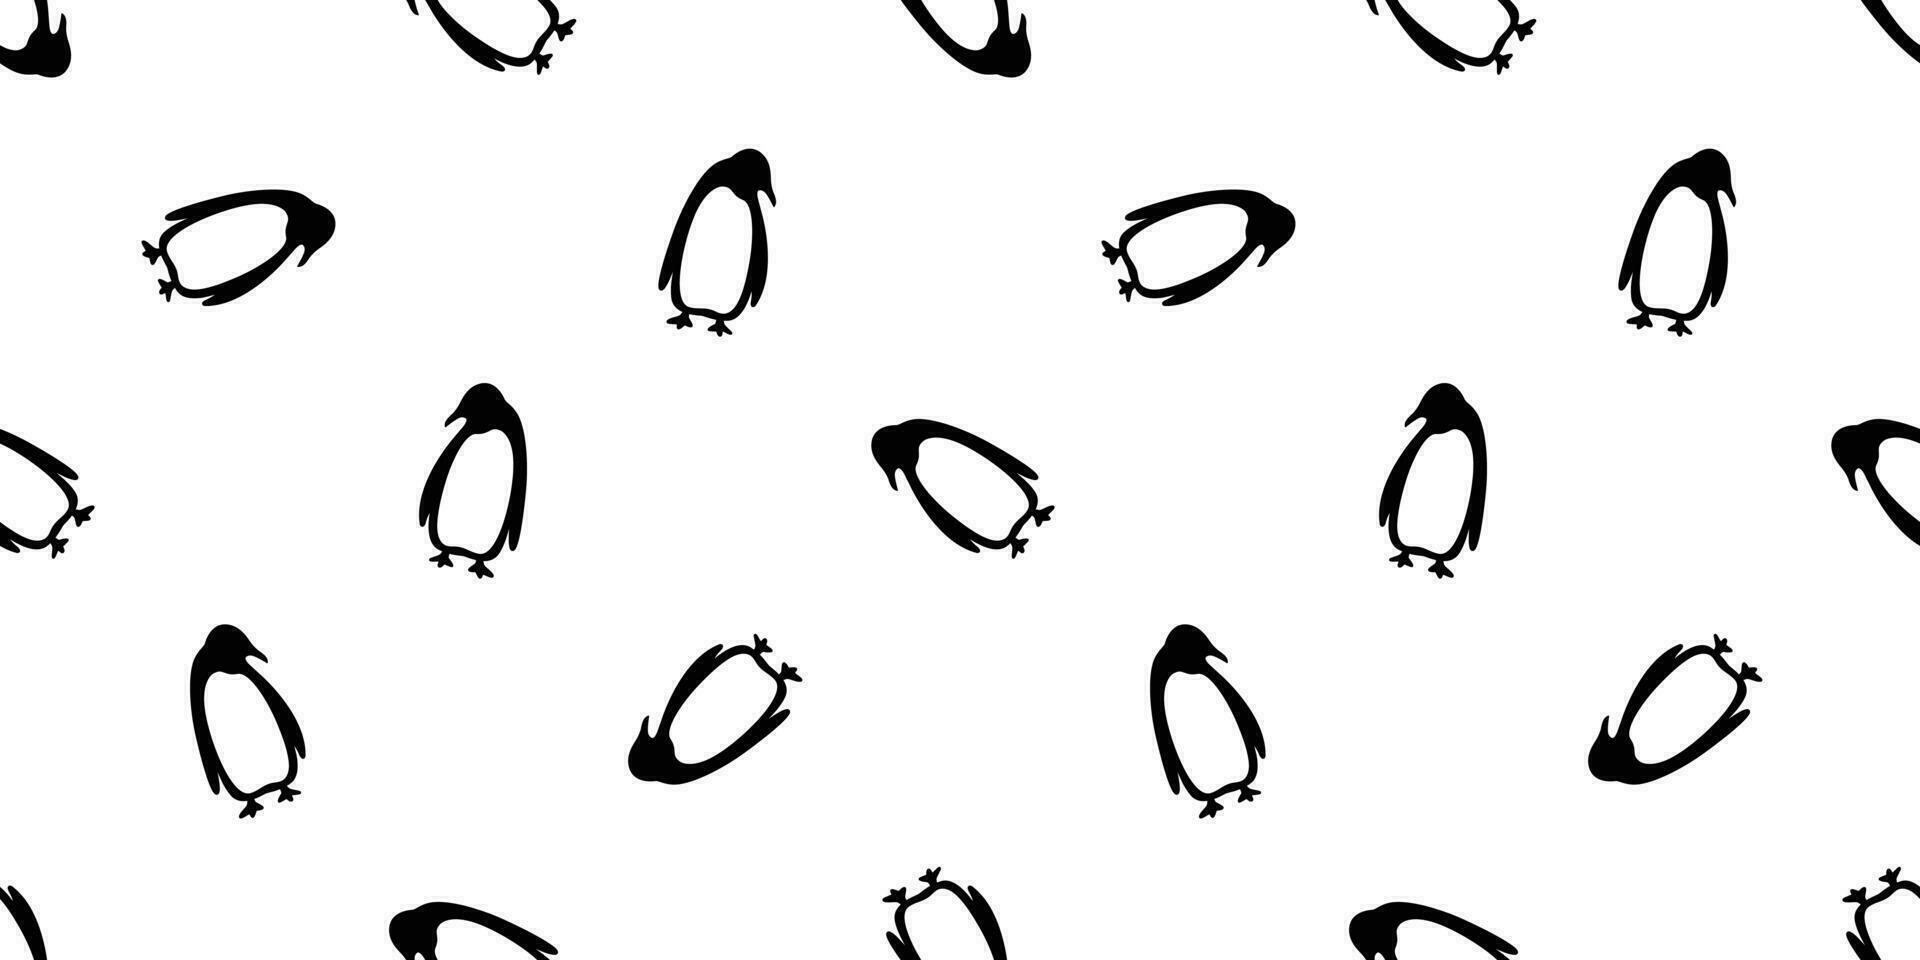 penguin seamless pattern vector cartoon bear polar salmon fish scarf isolated tile background repeat wallpaper doodle illustration